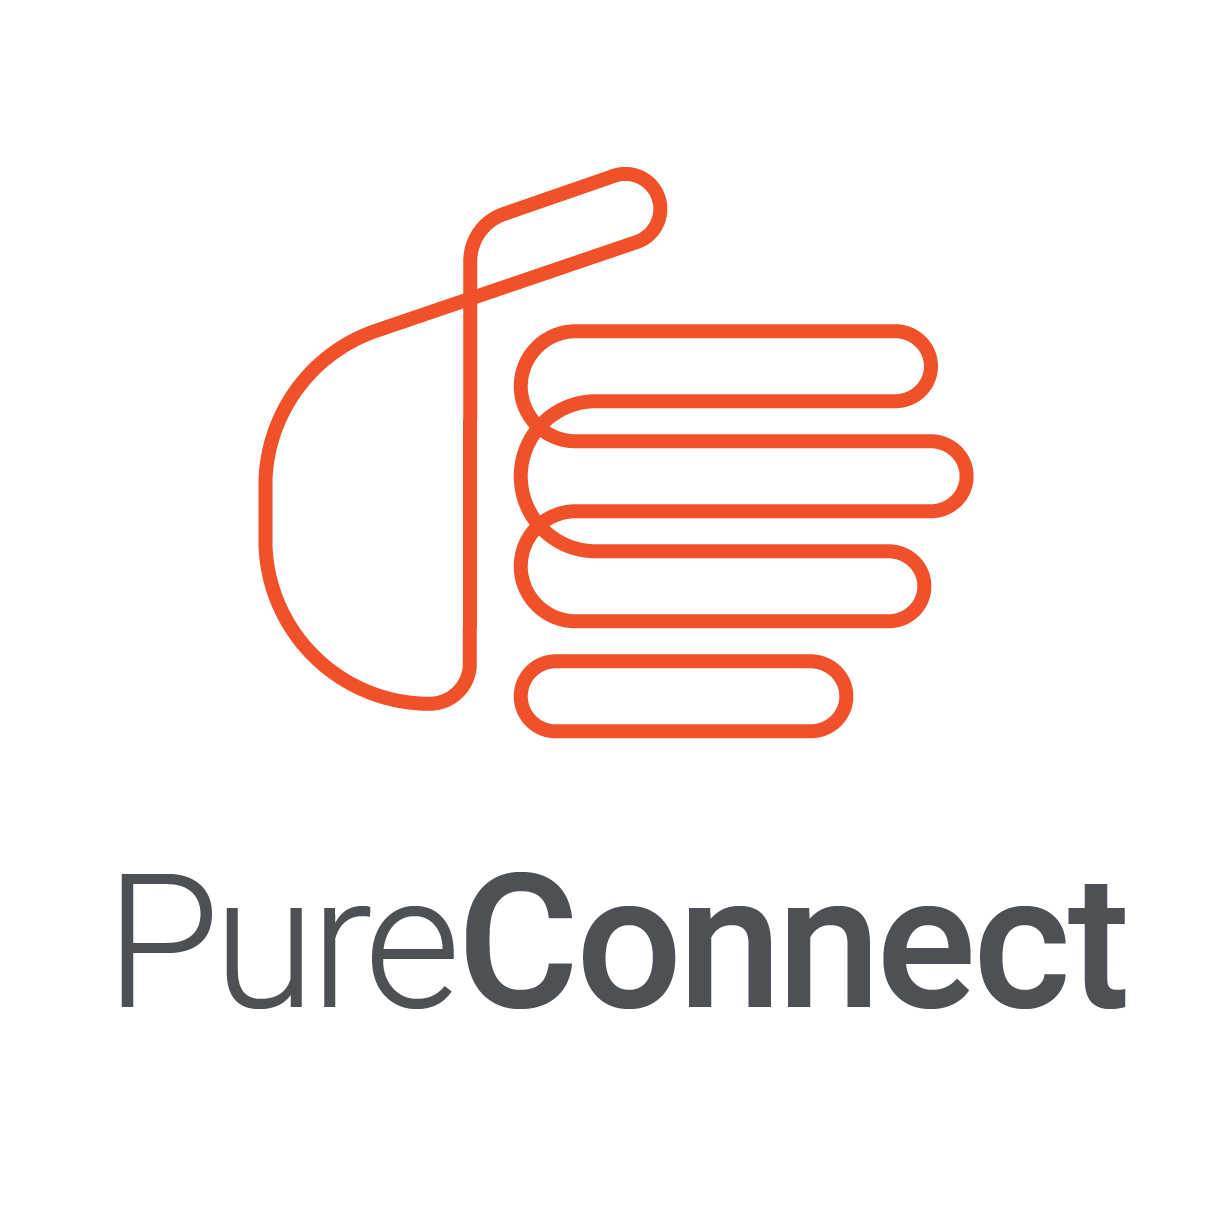 pureconnect color text 4x